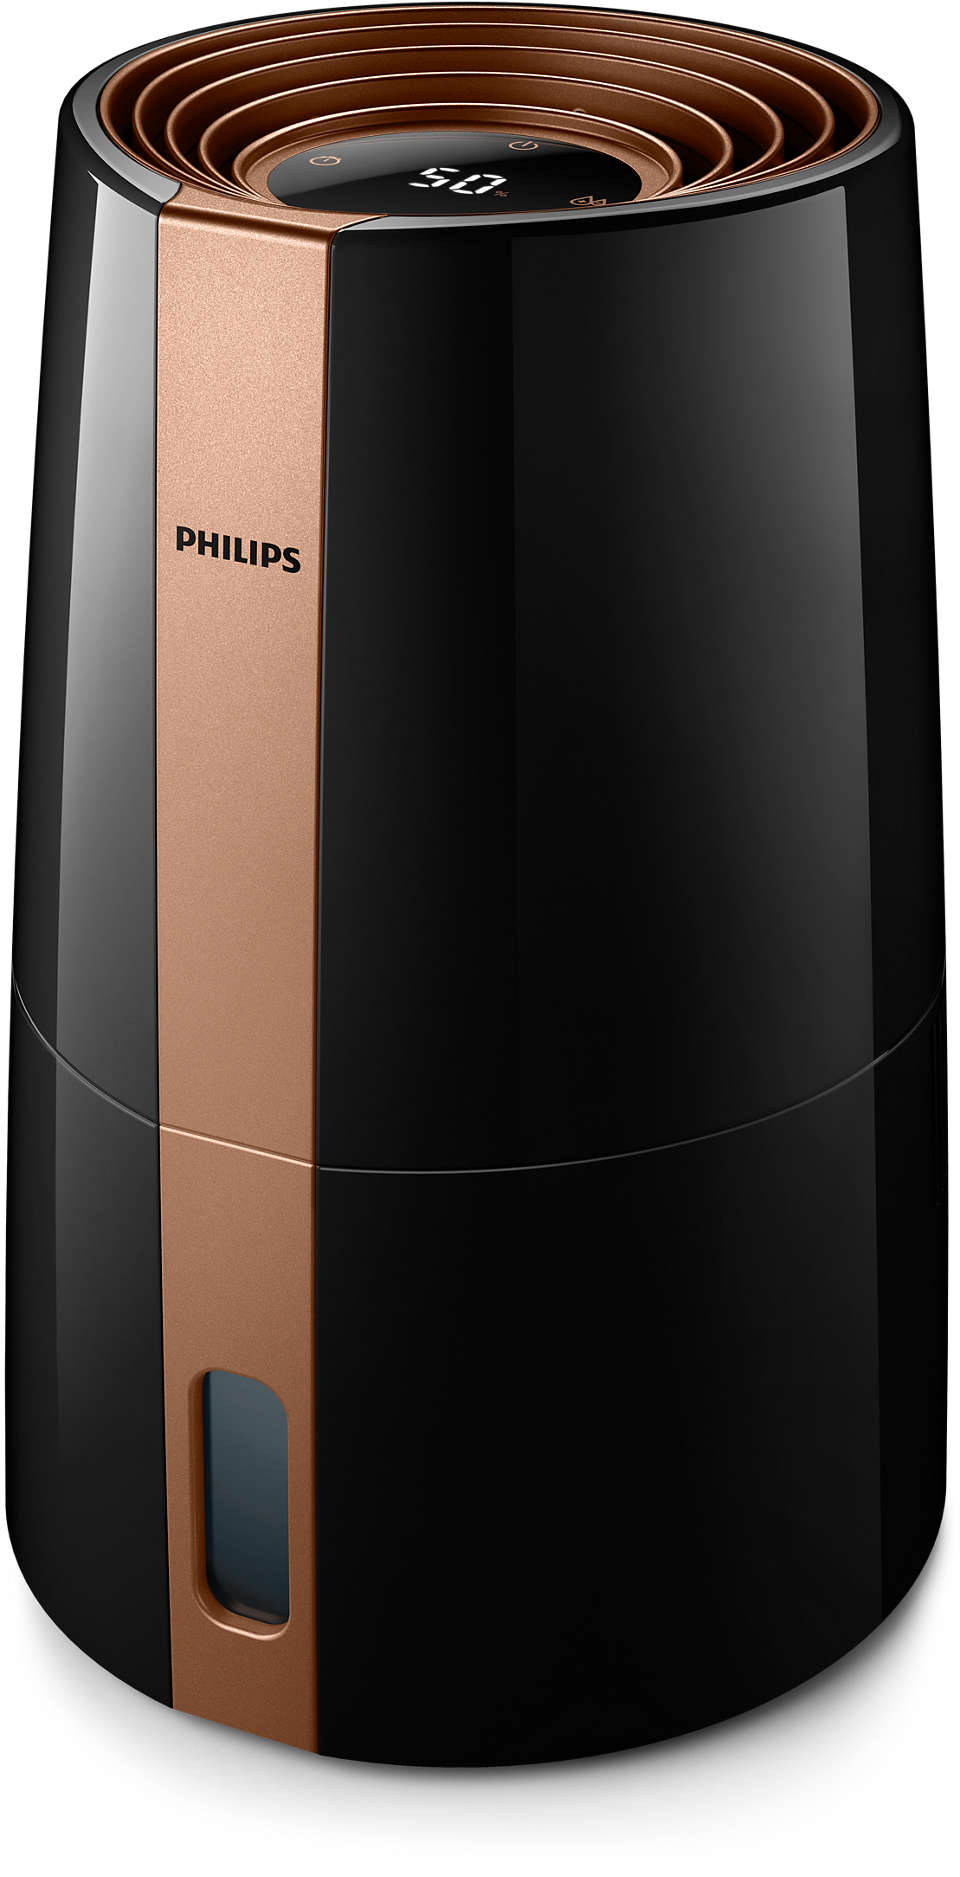 Philips hygrometer - Der Testsieger unserer Produkttester